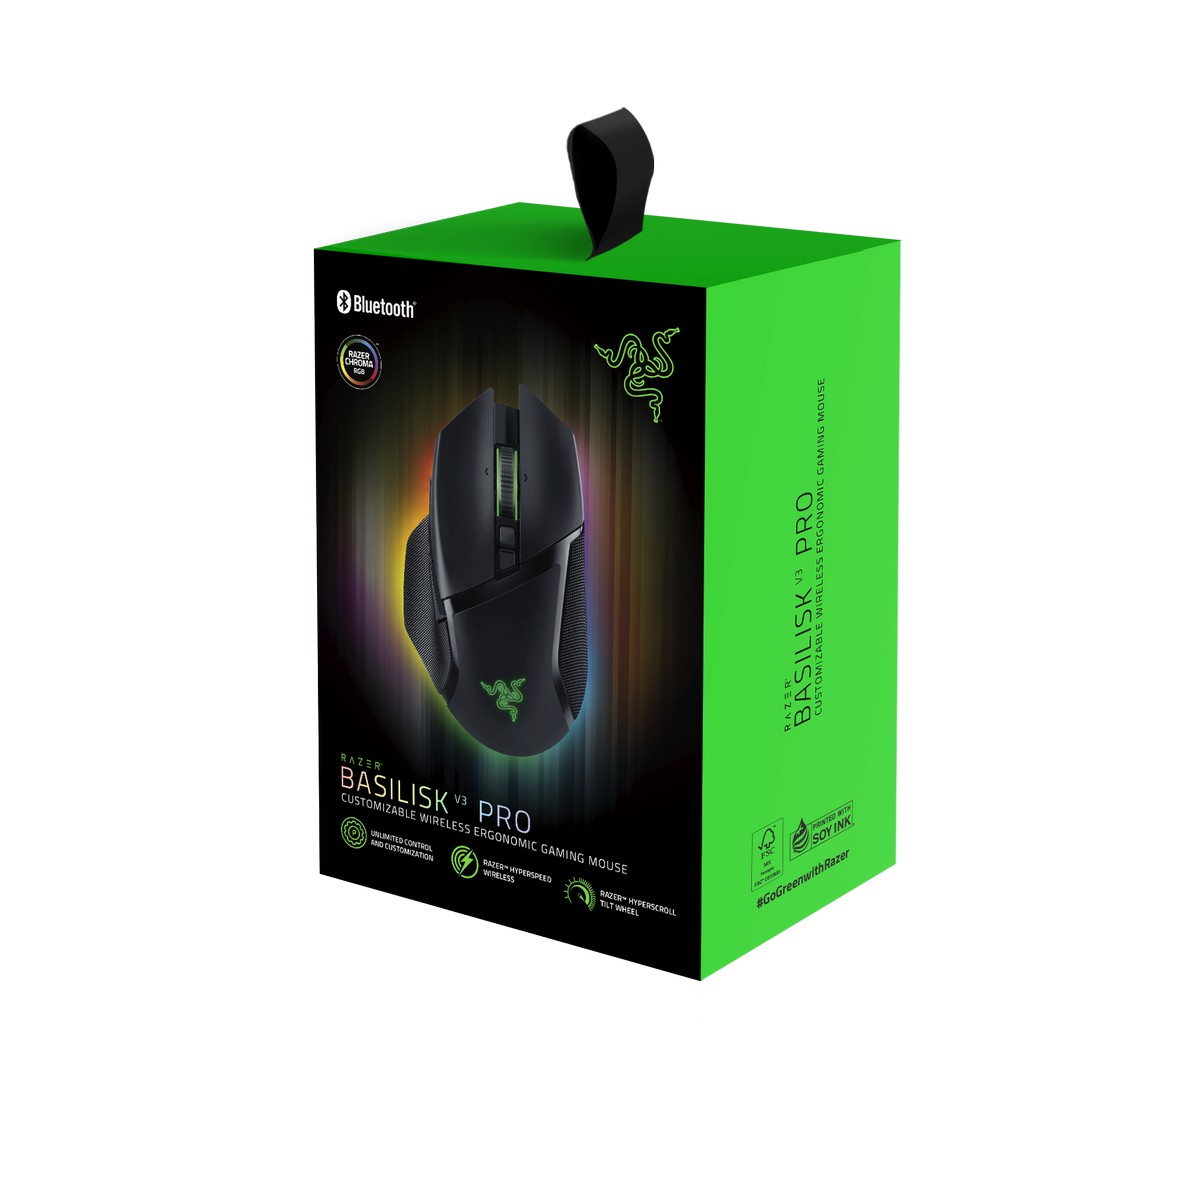 Razer's Basilisk V3 Pro might be my new favourite mouse